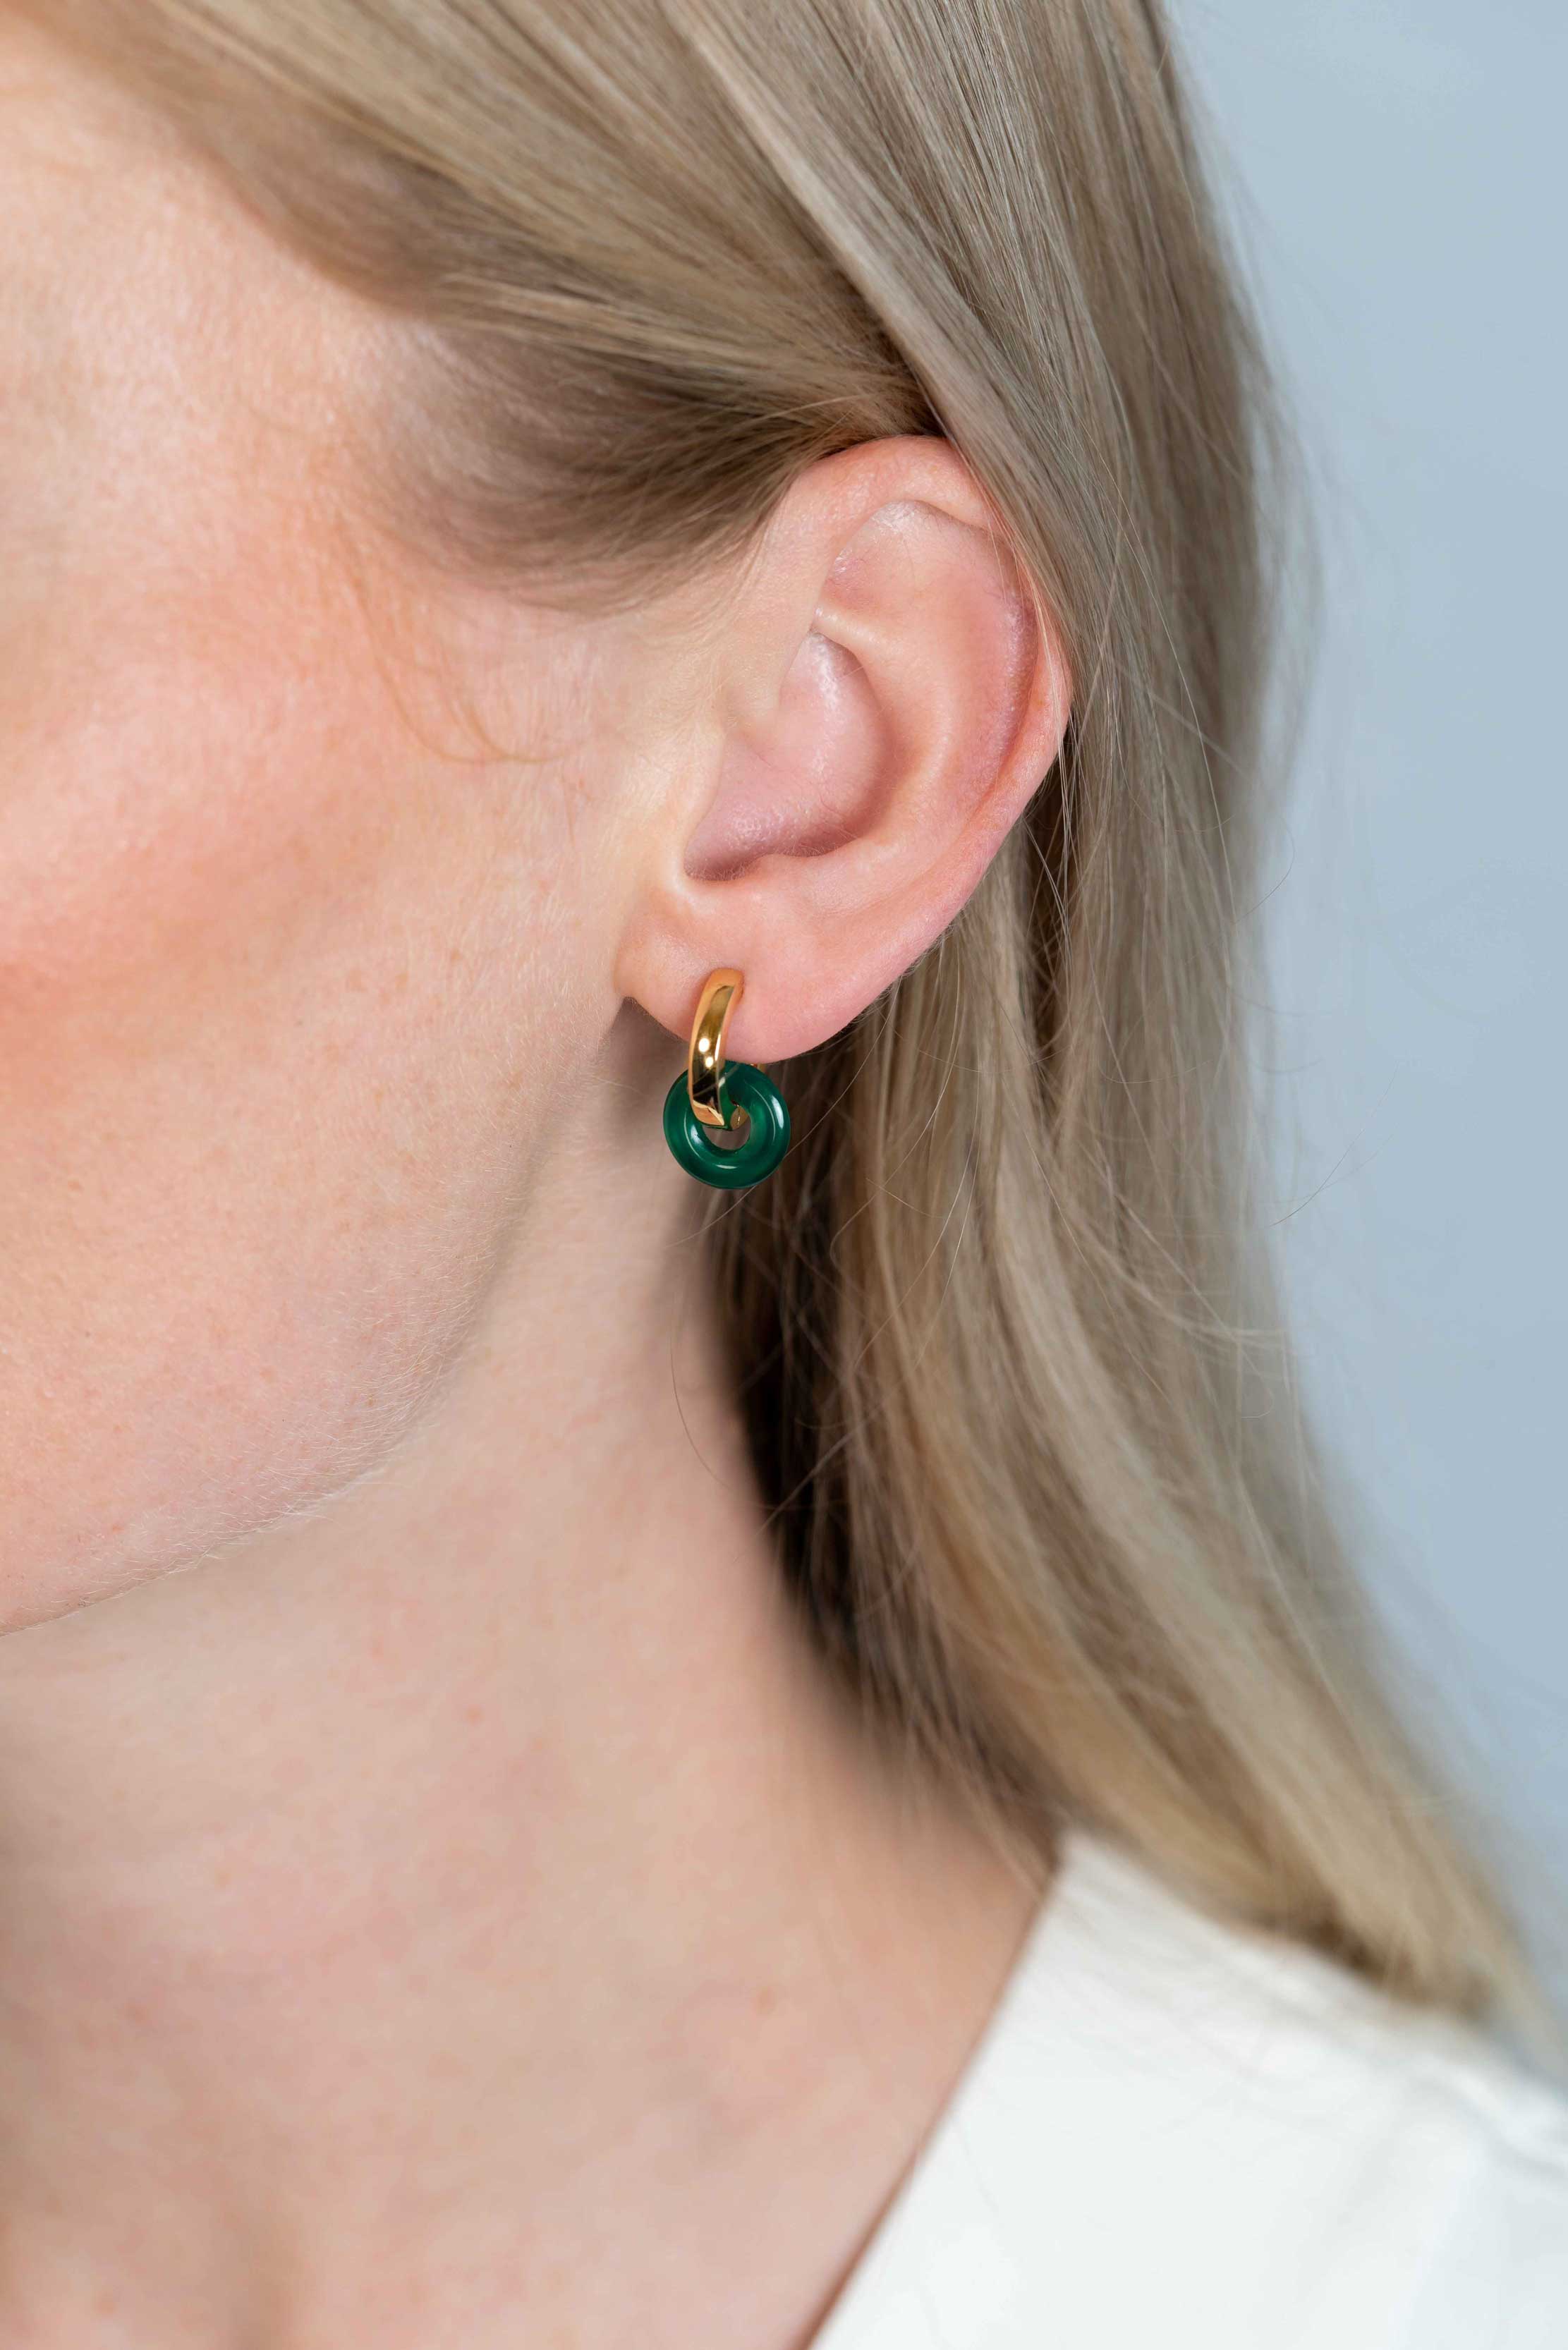 12mm ZINZI Earrings Pendants Round in Green Agate ZICH2274G (excl. hoop earrings)